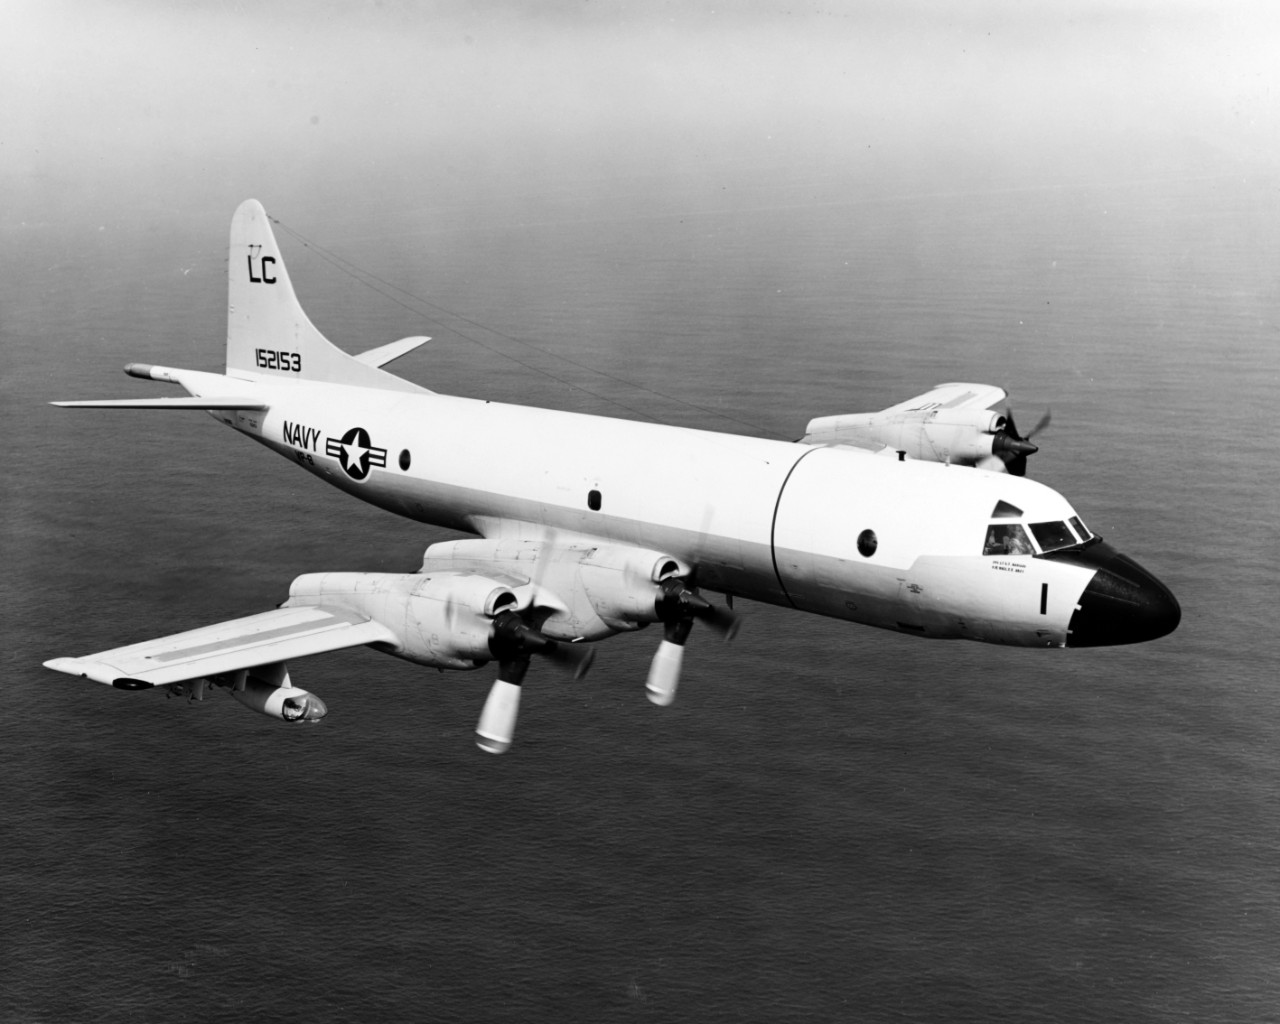 P-3A "Orion" aircraft